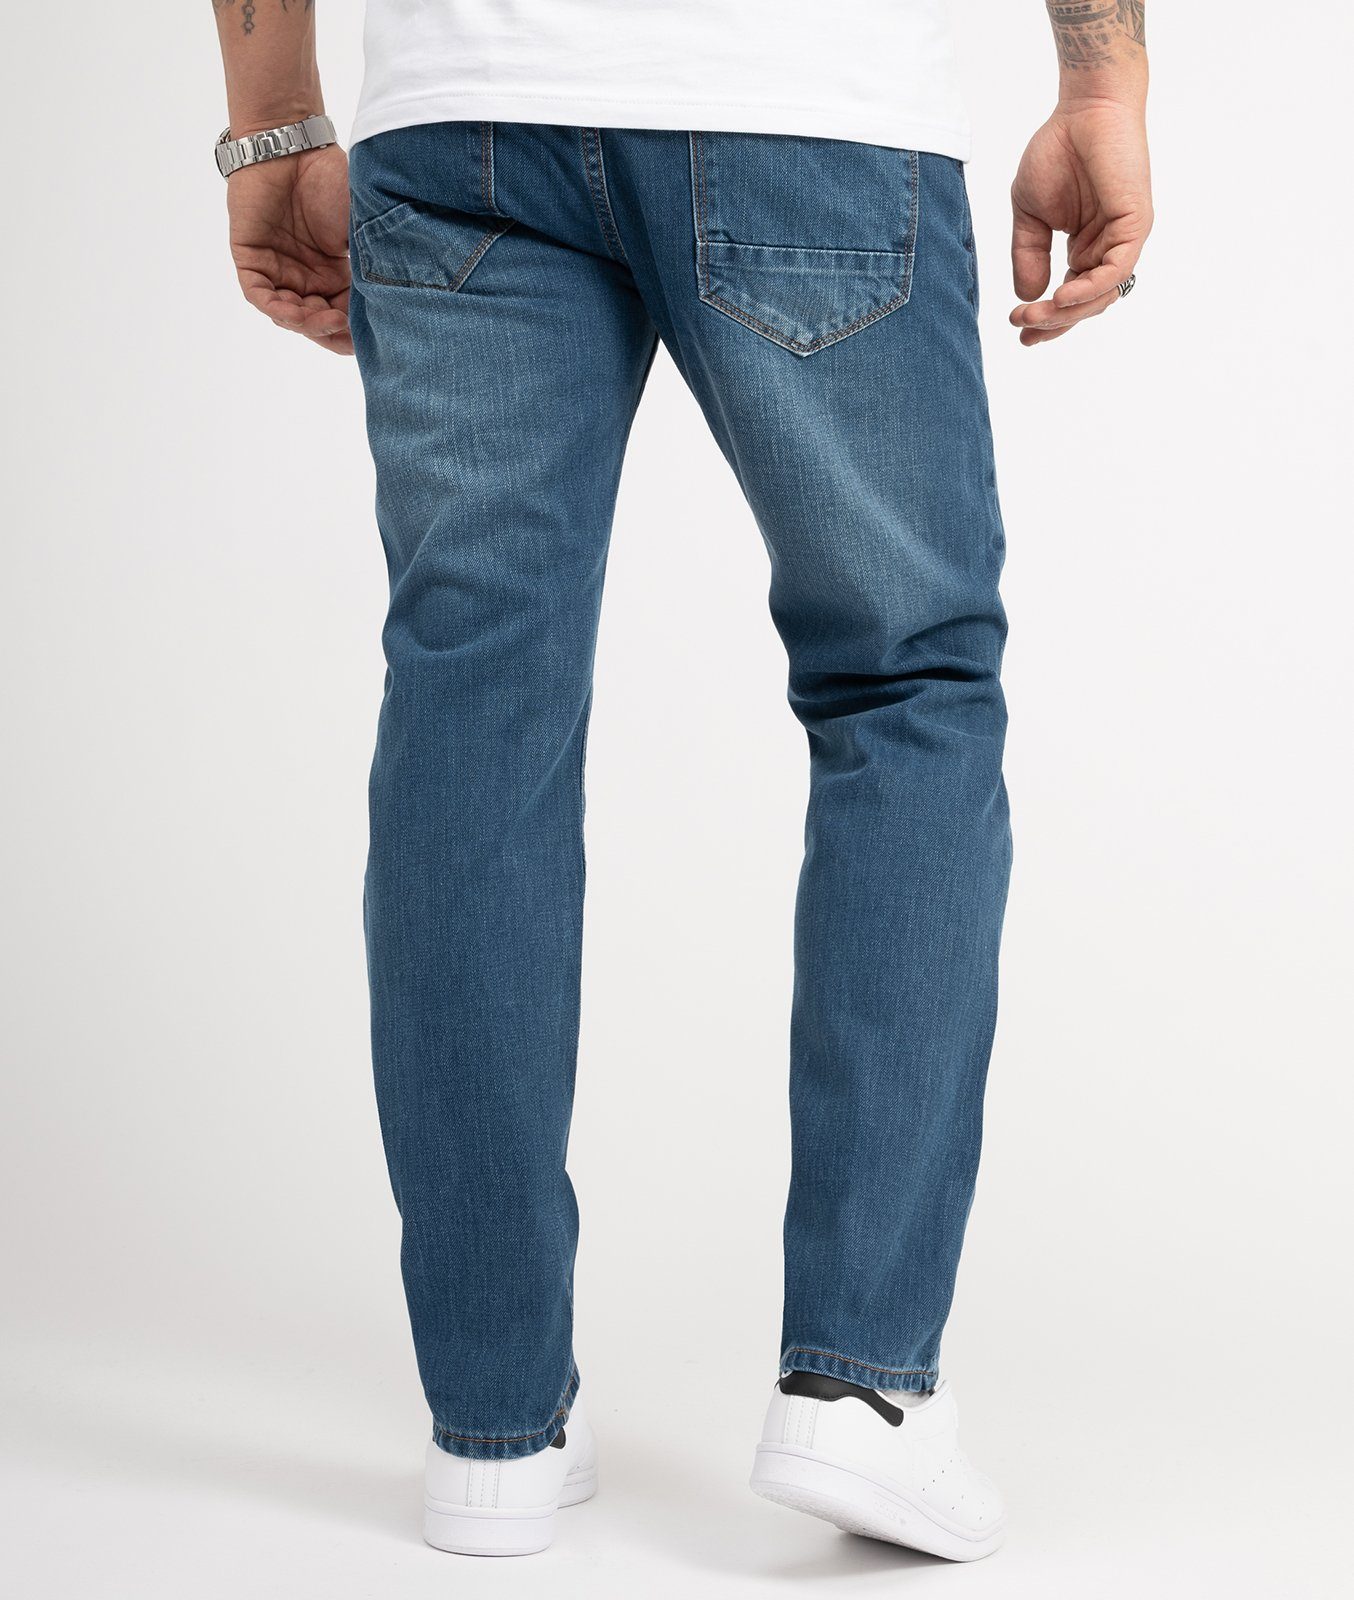 Indumentum Comfort Jeans Fit Straight-Jeans Herren IC-701